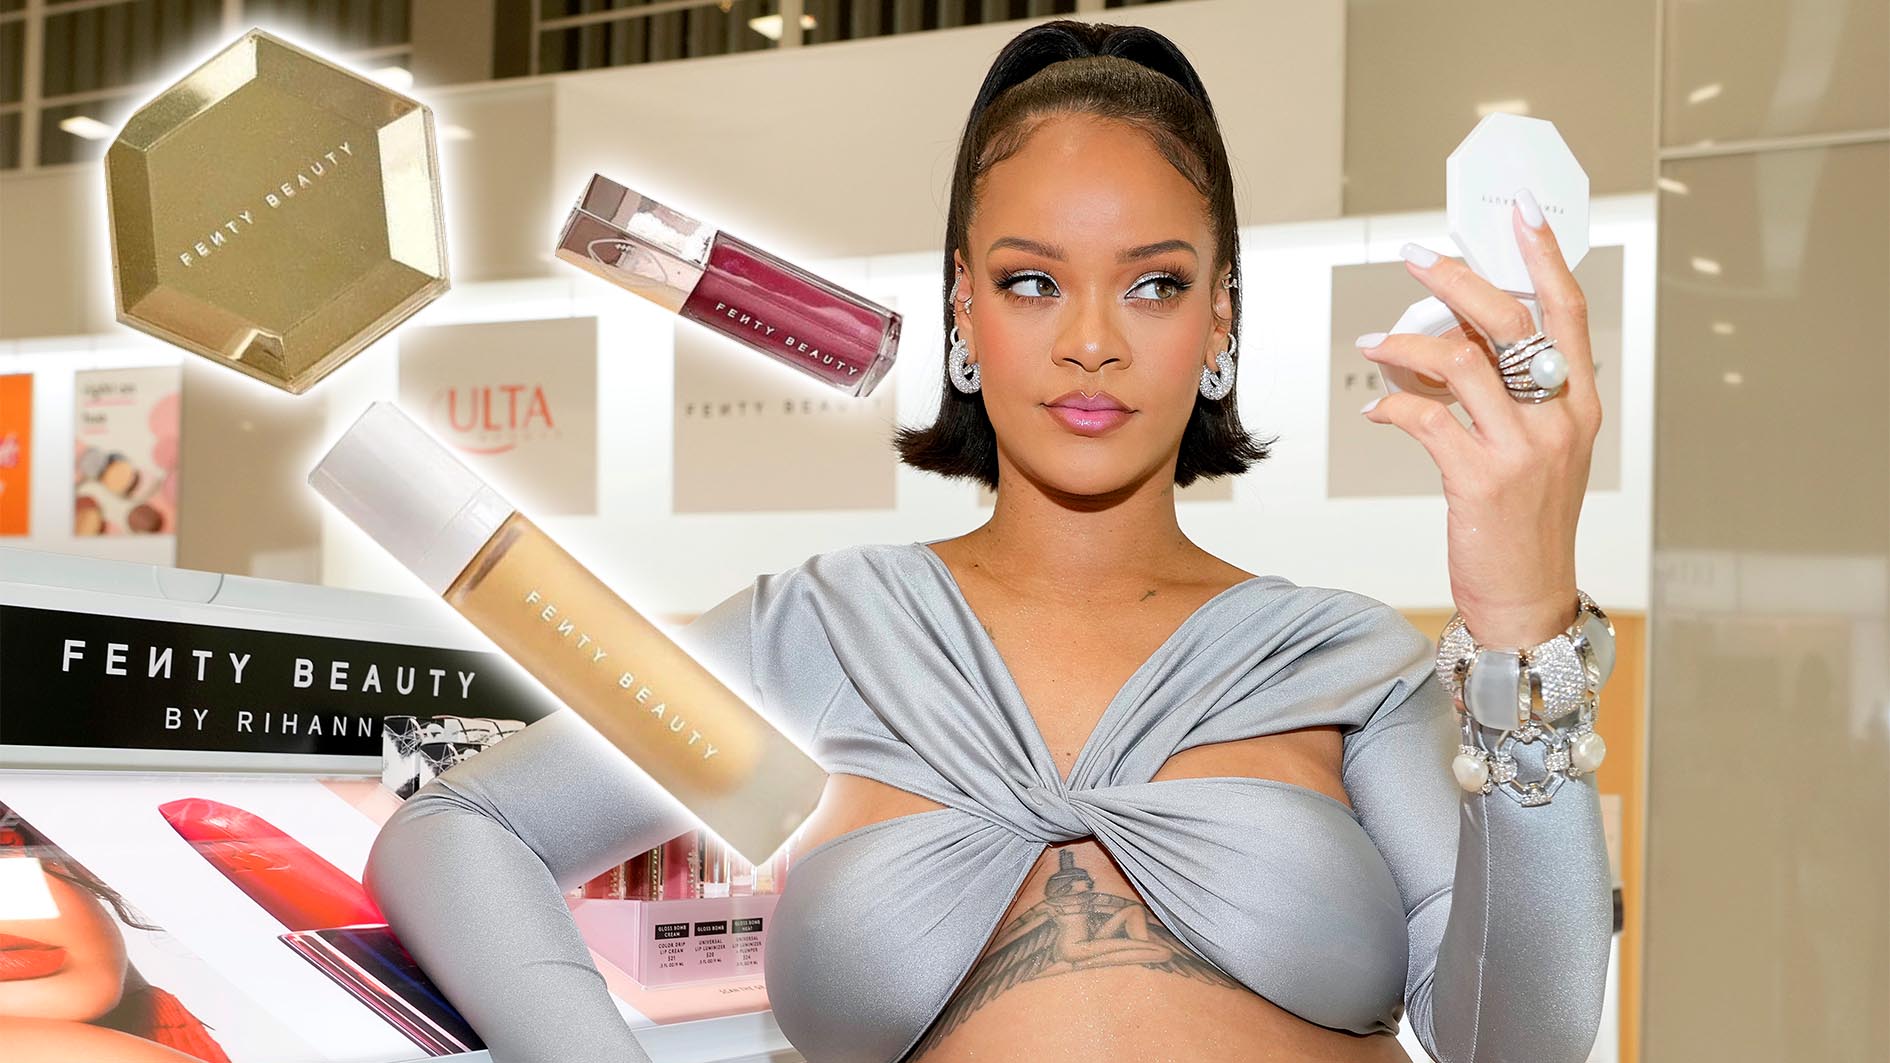 The Rihanna Fenty Beauty makeup collection